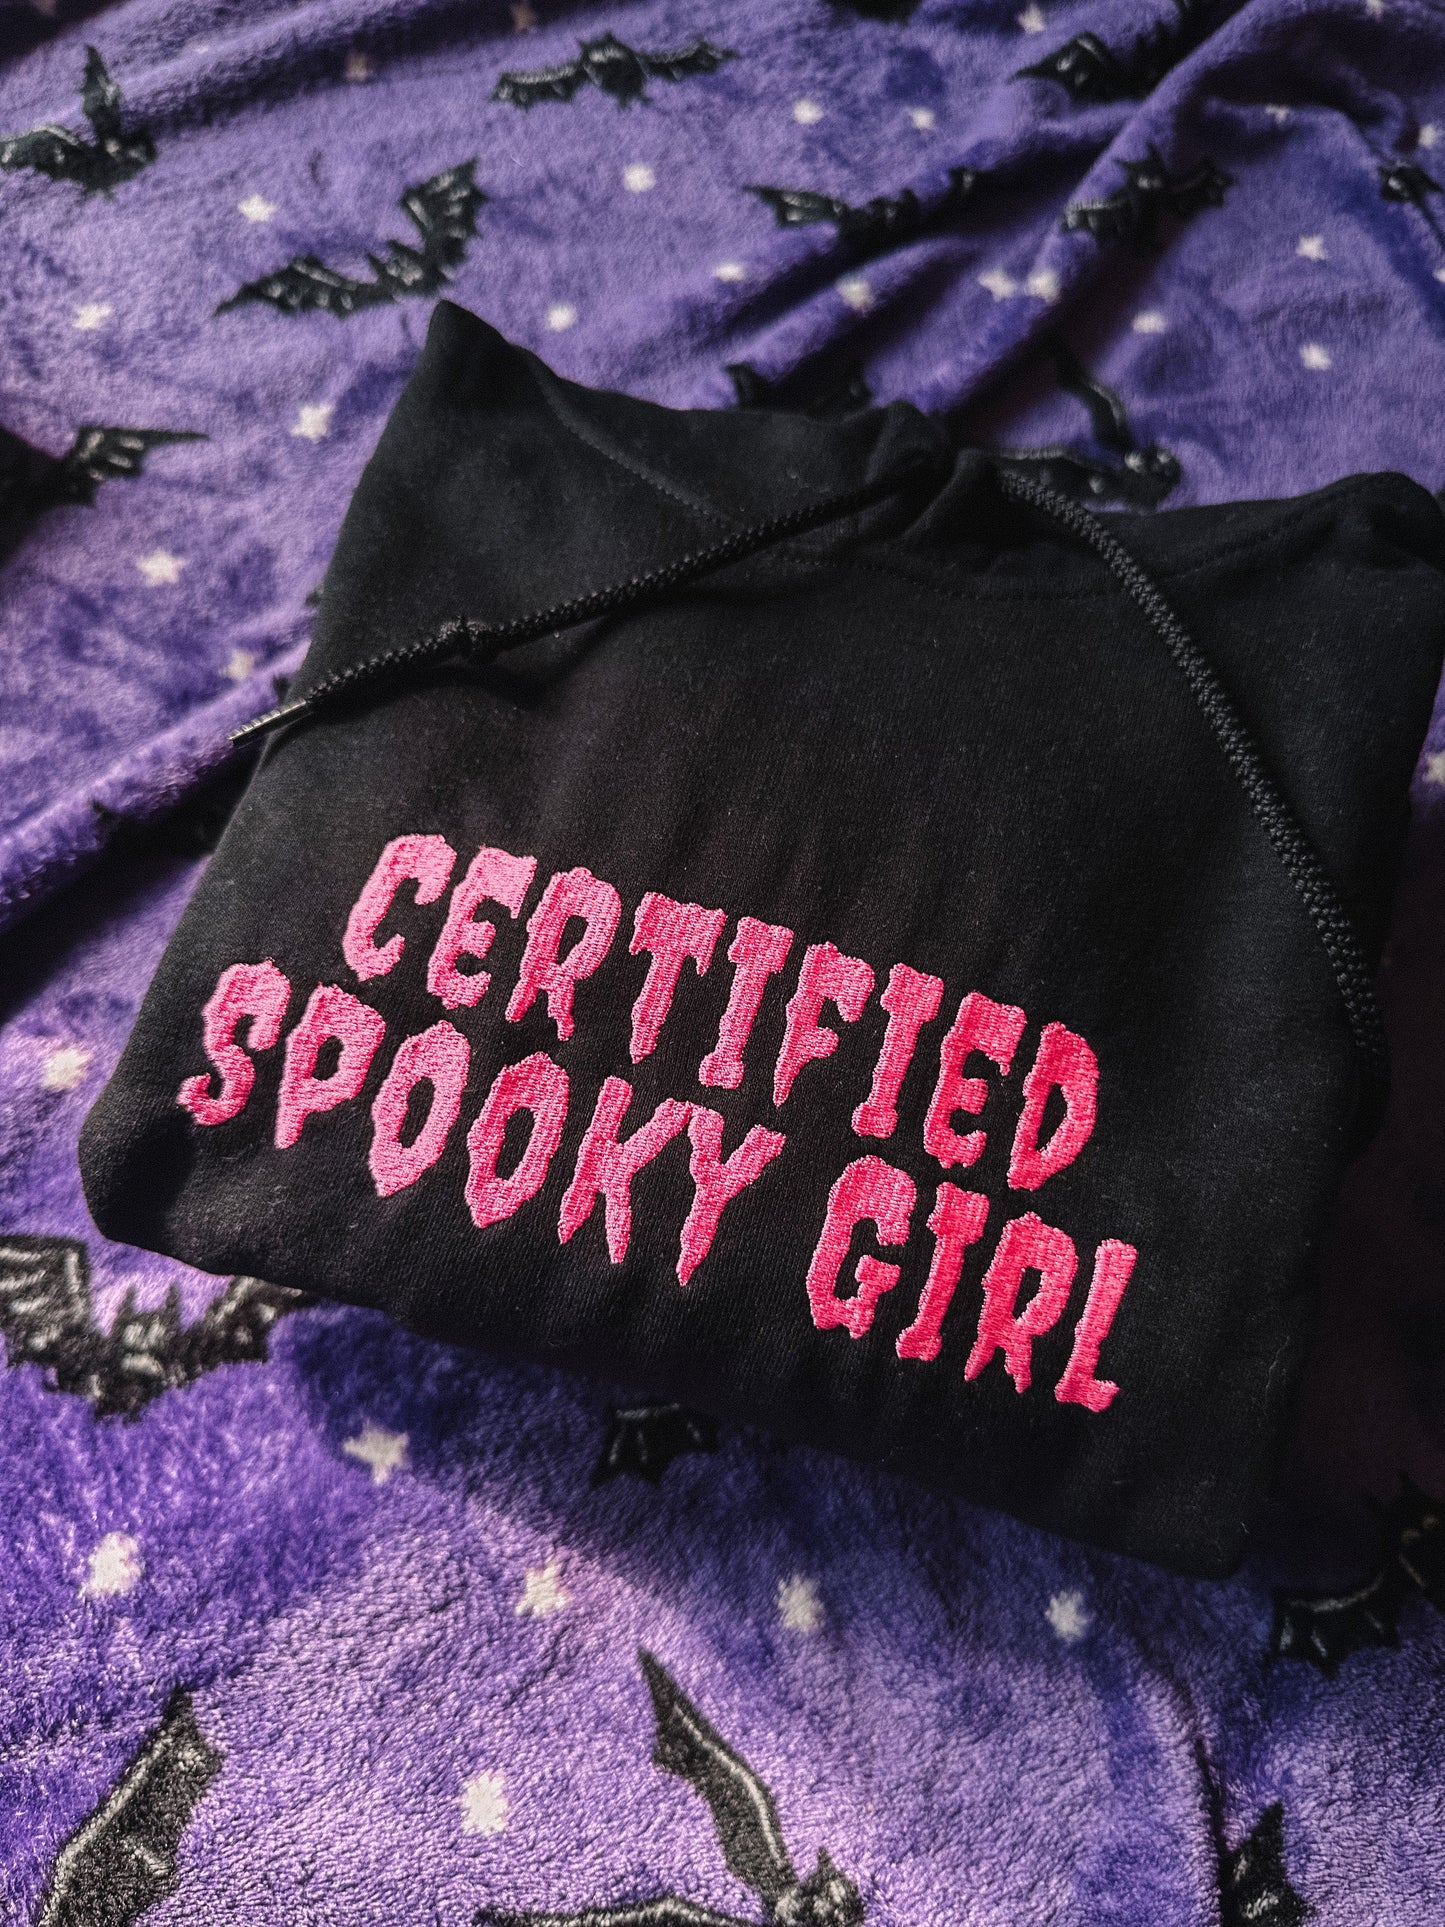 Premium Certified Spooky Girl/Boy hooded sweatshirt